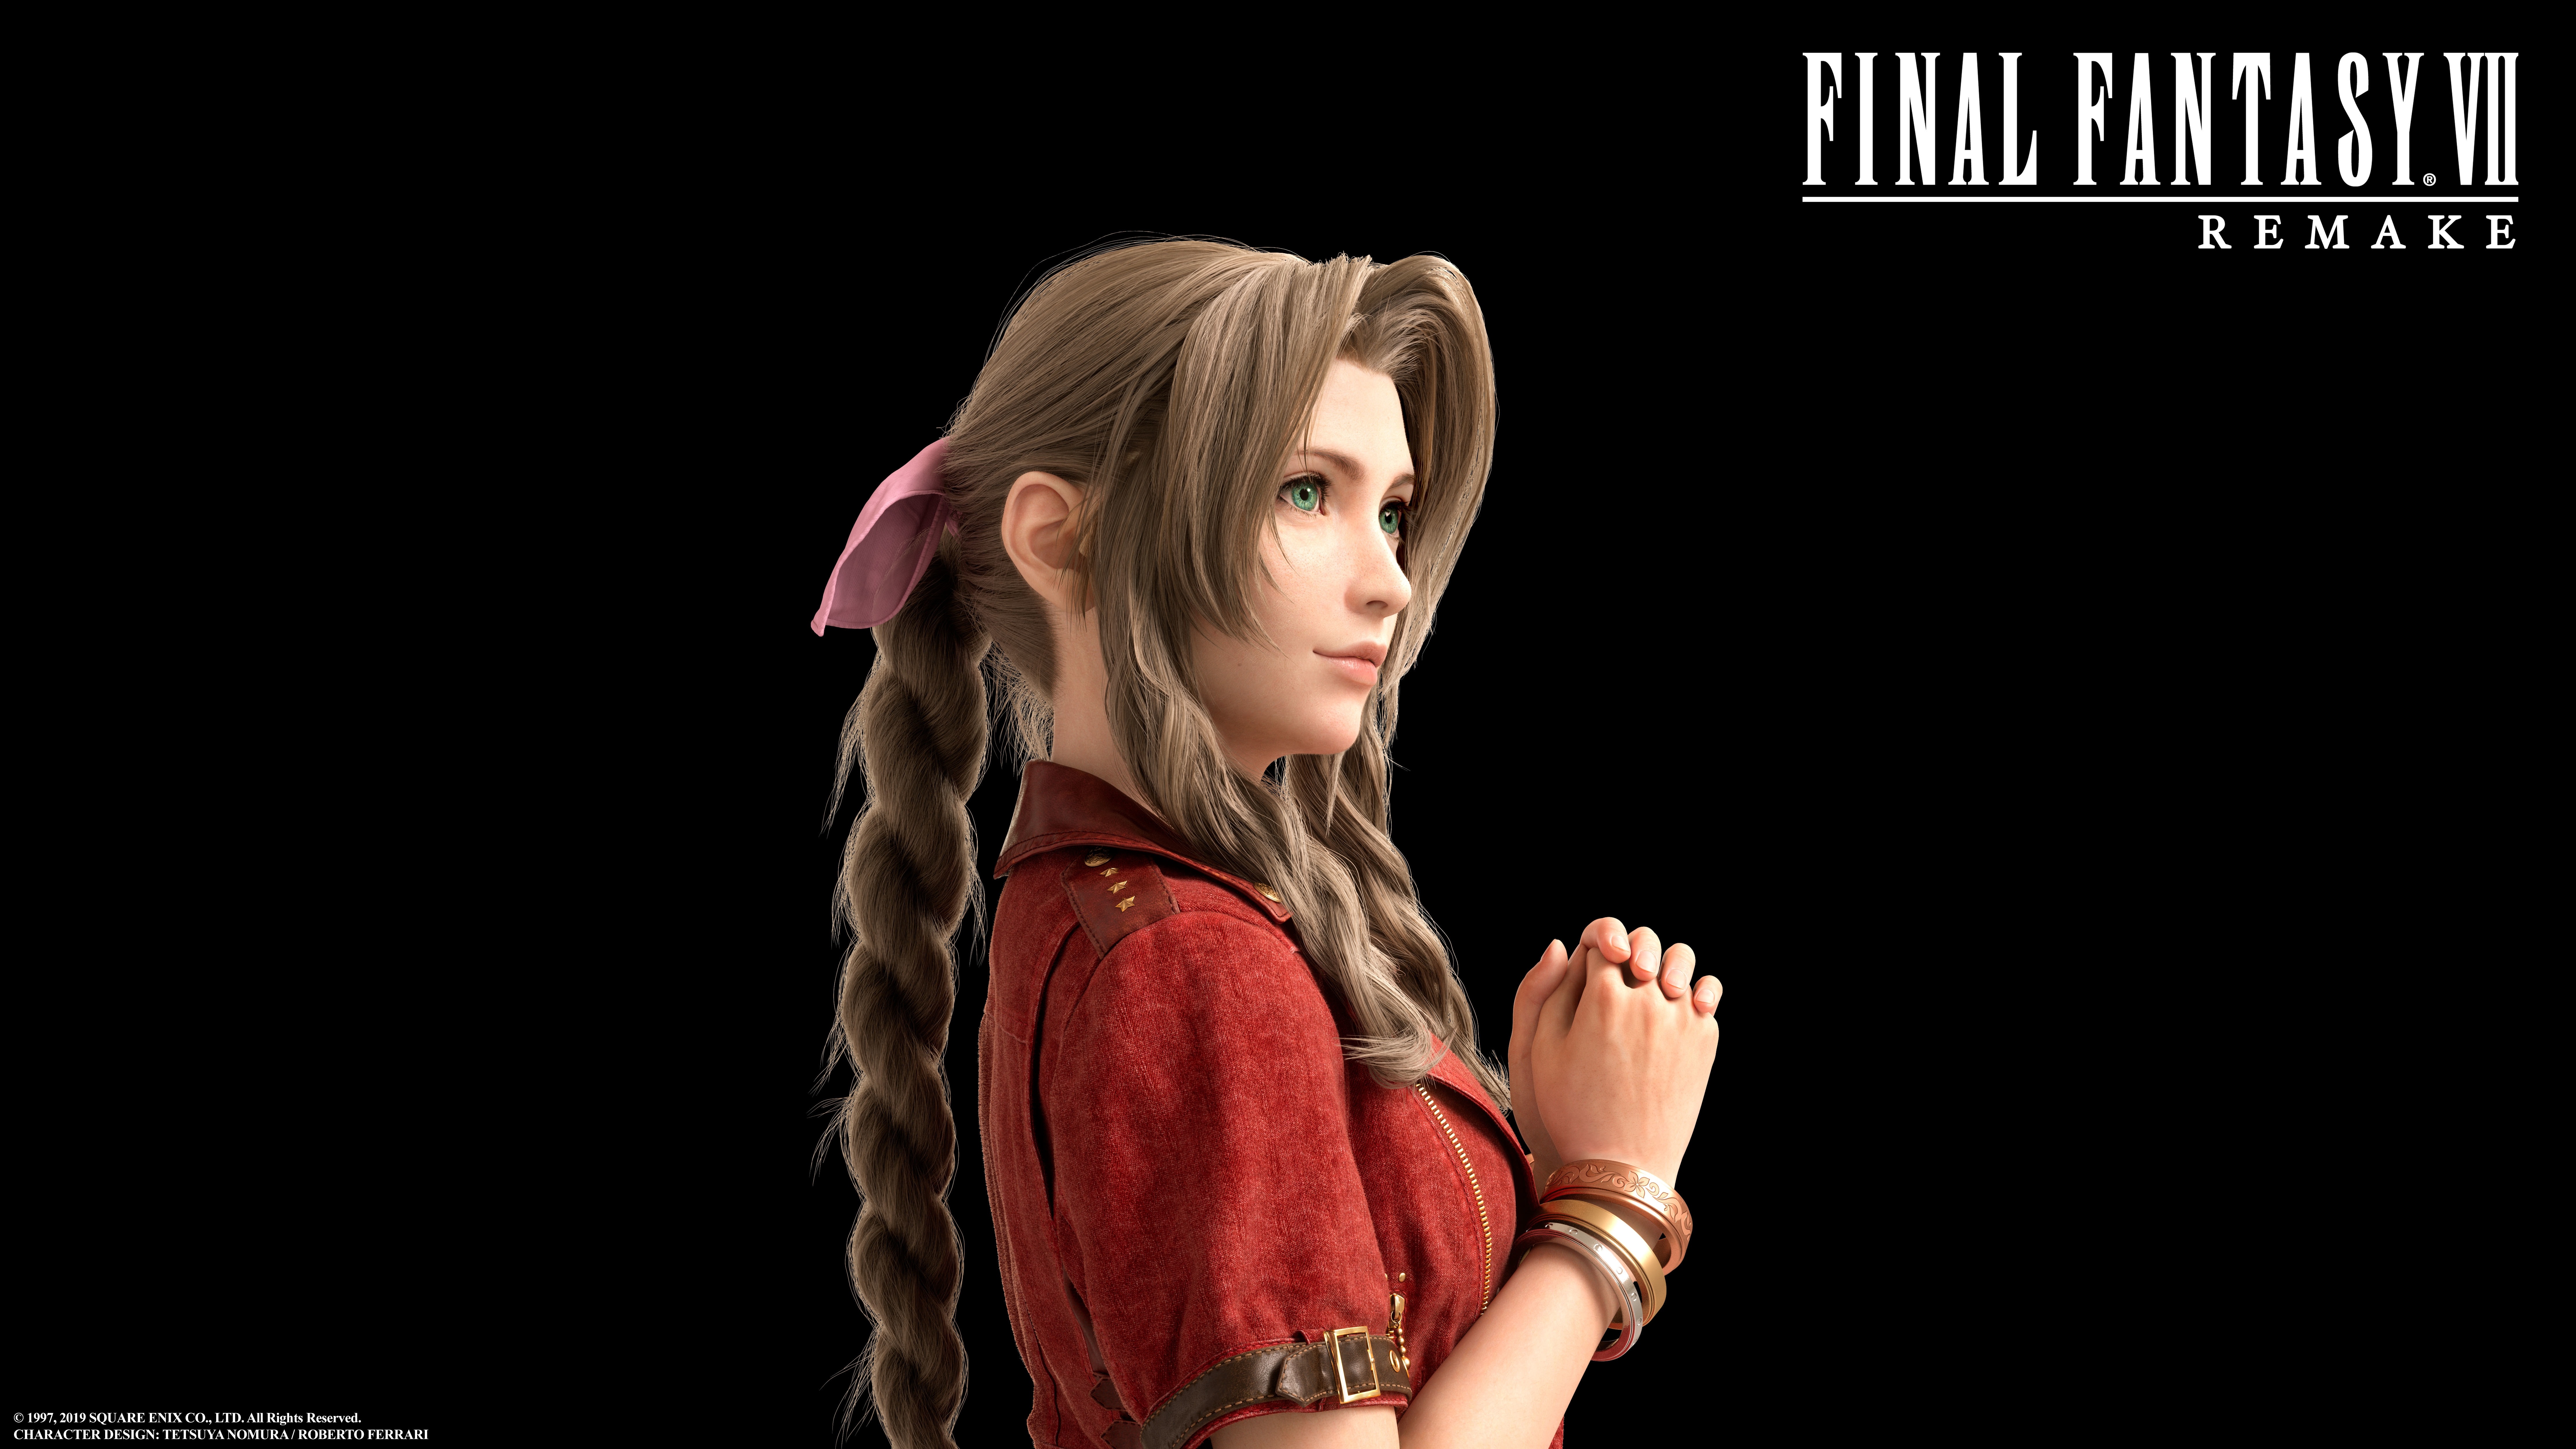 General 8892x5002 video games Final Fantasy Final Fantasy VII: Remake CGI digital art video game art Aerith Gainsborough Square Enix video game girls